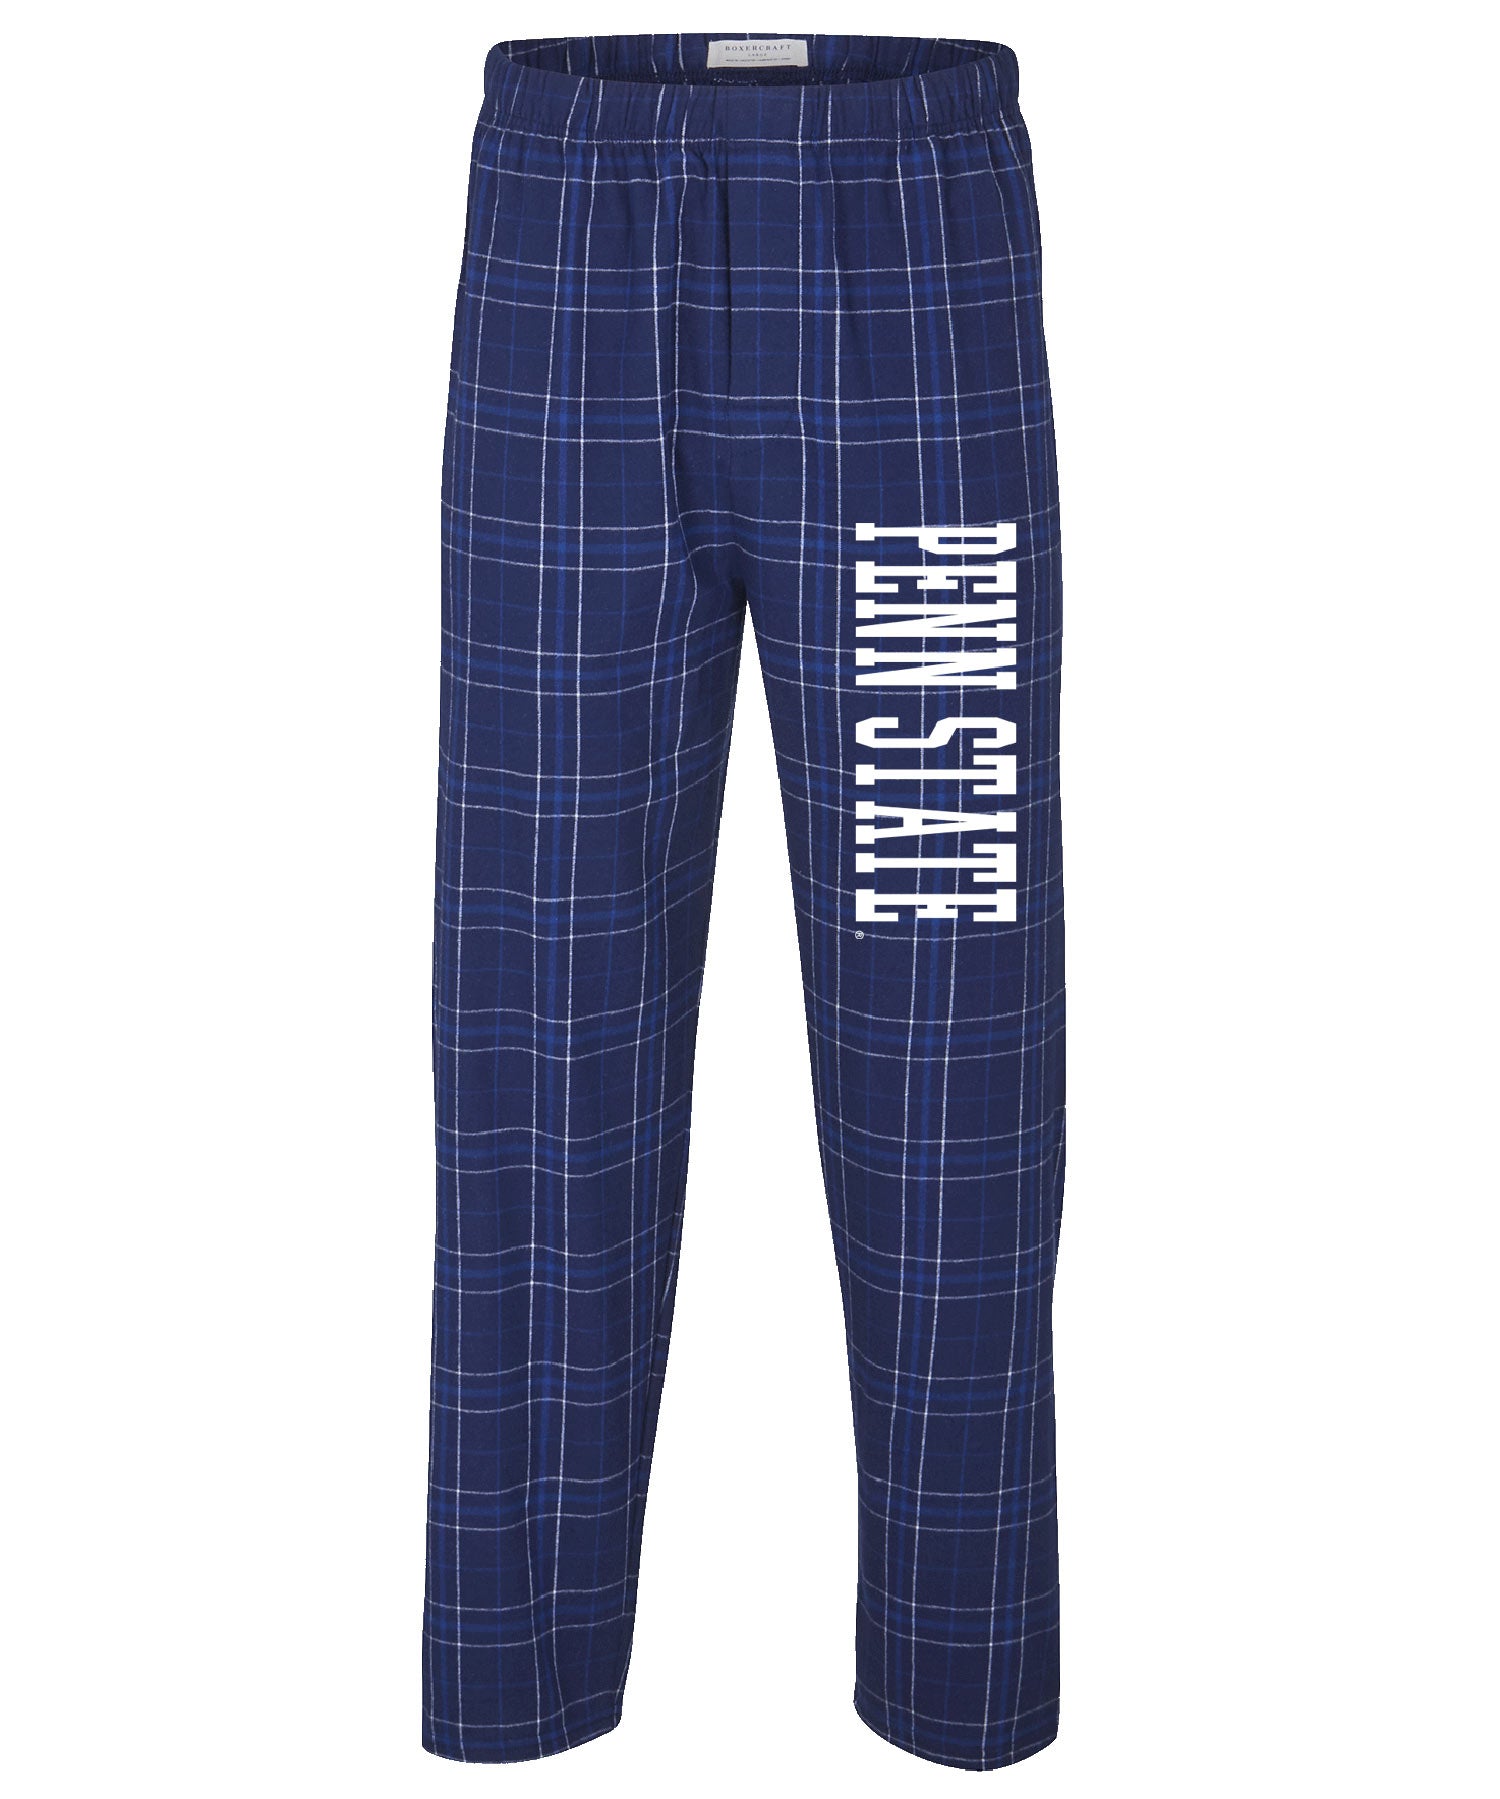 Penn State Men's Flannel Sleep Shorts